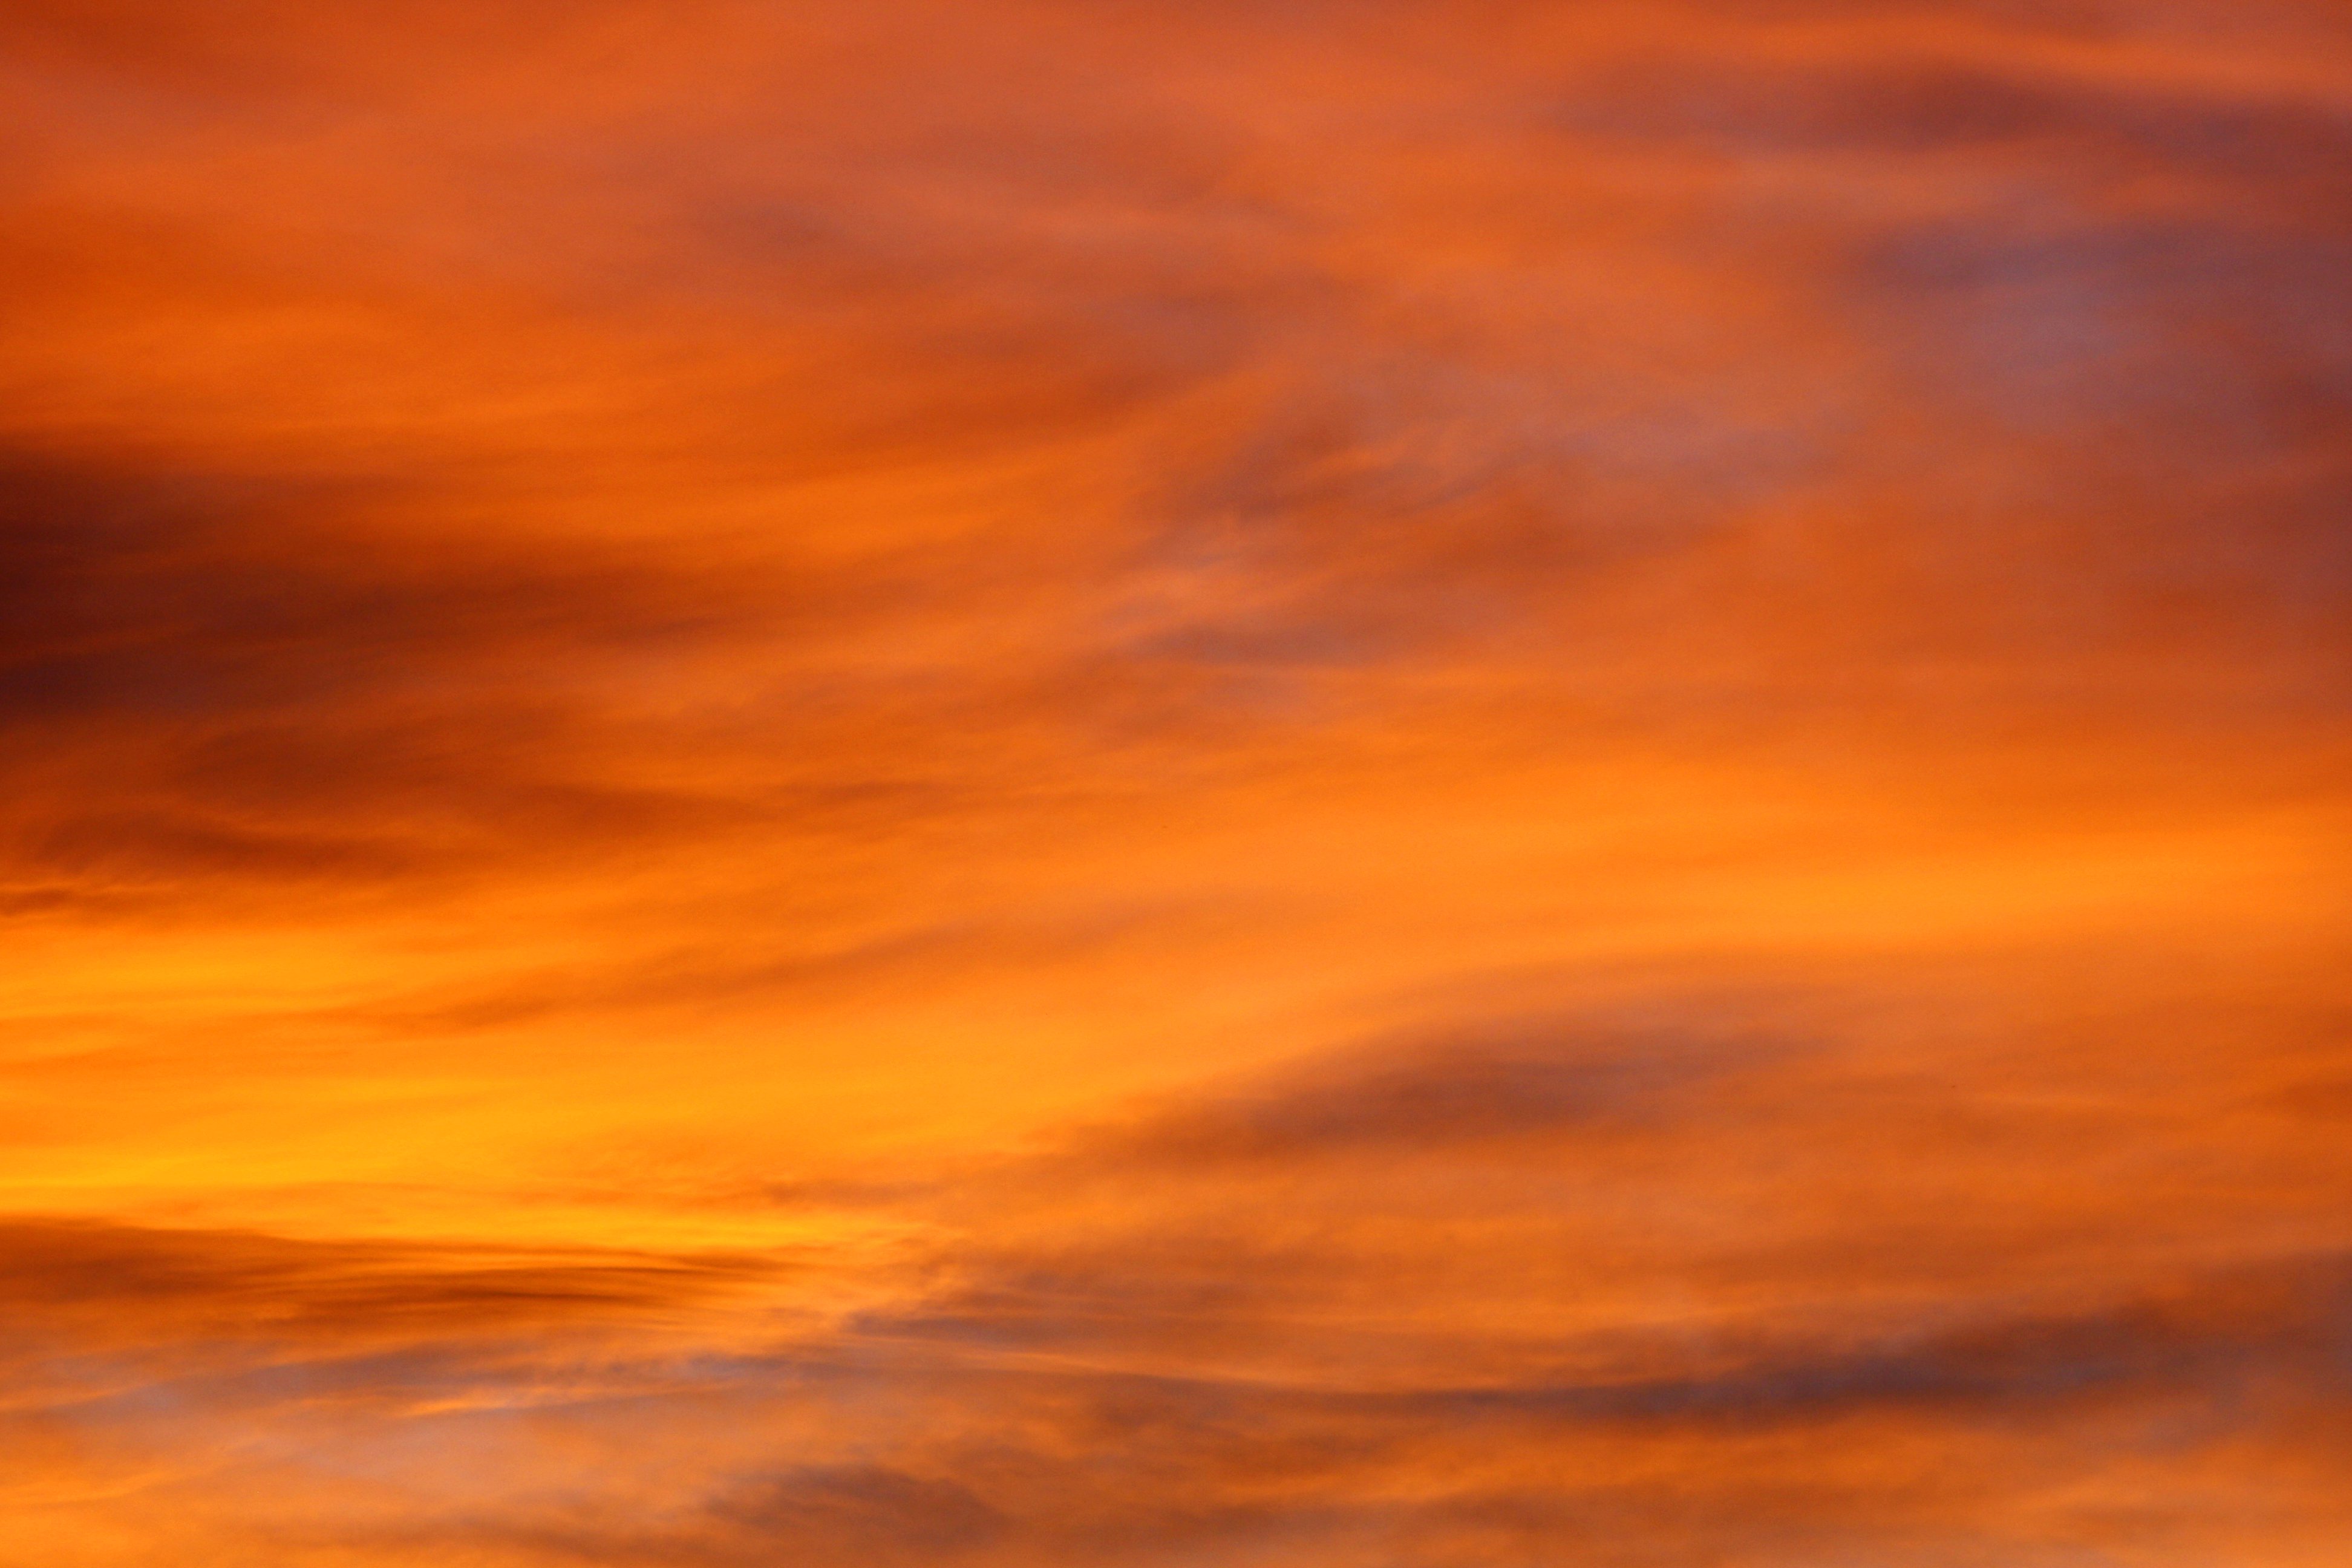 Brilliant Orange Sunset Clouds Picture | Free Photograph | Photos